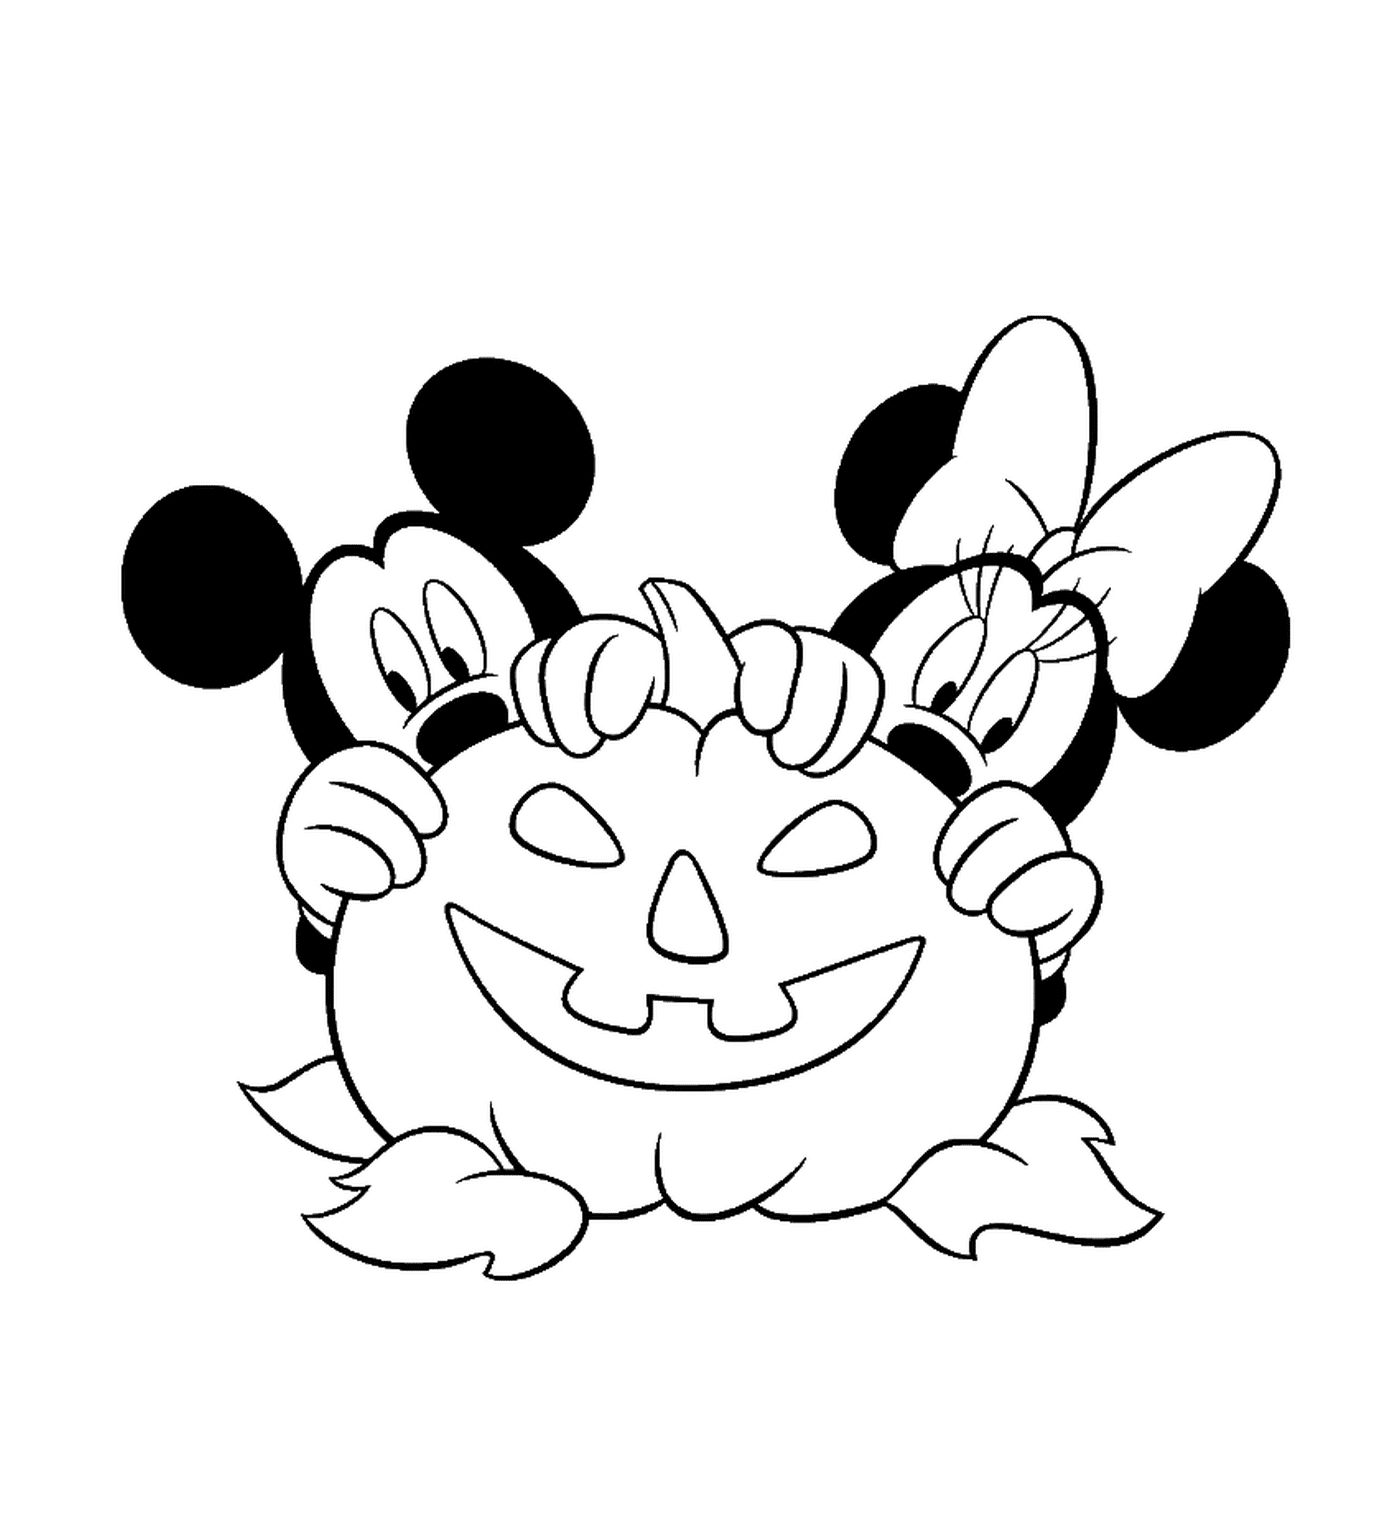  Mickey and Minnie hidden behind a pumpkin 